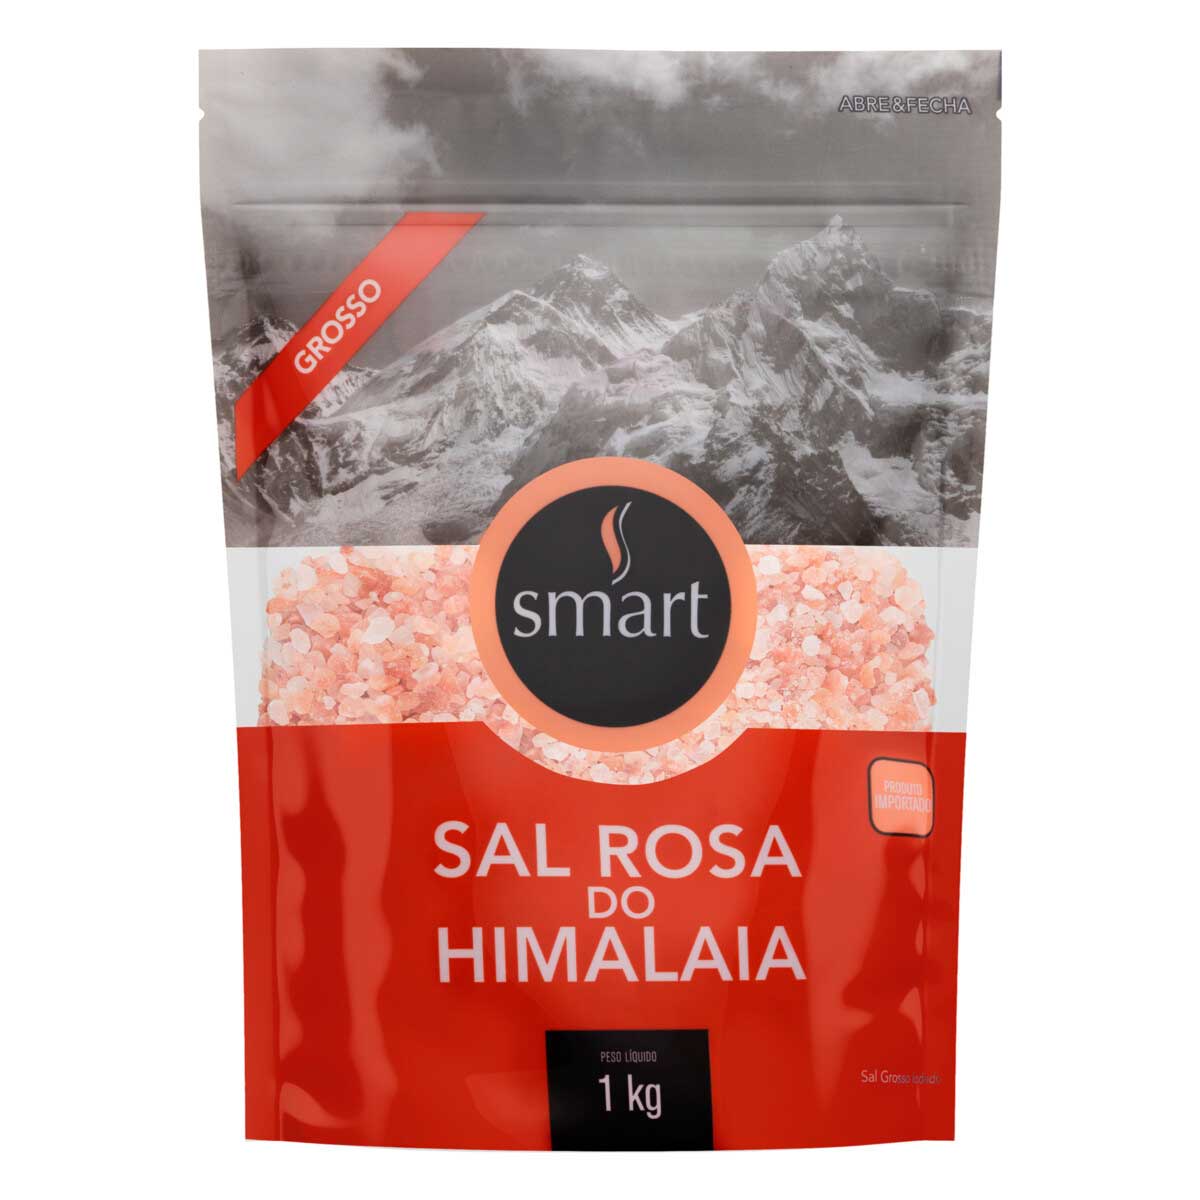 sal-grosso-do-himalaia-rosa-smart-1kg-1.jpg